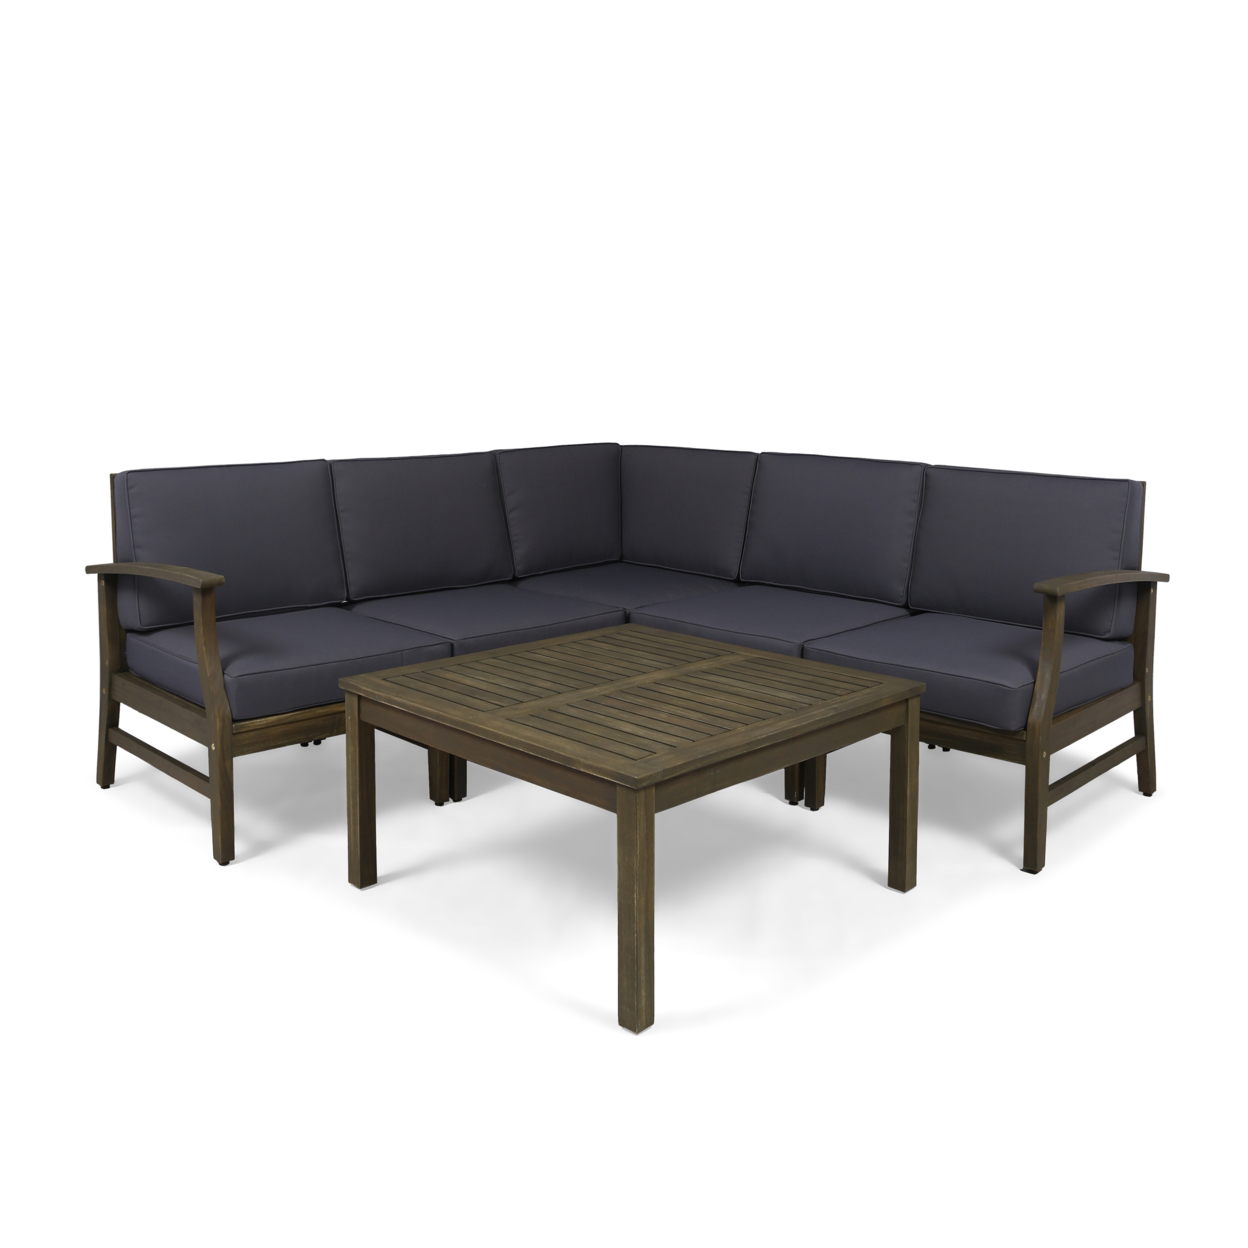 Martina Outdoor 6 Piece Acacia Wood Sectional Sofa And Coffee Table Set - Gray Finish + Dark Gray